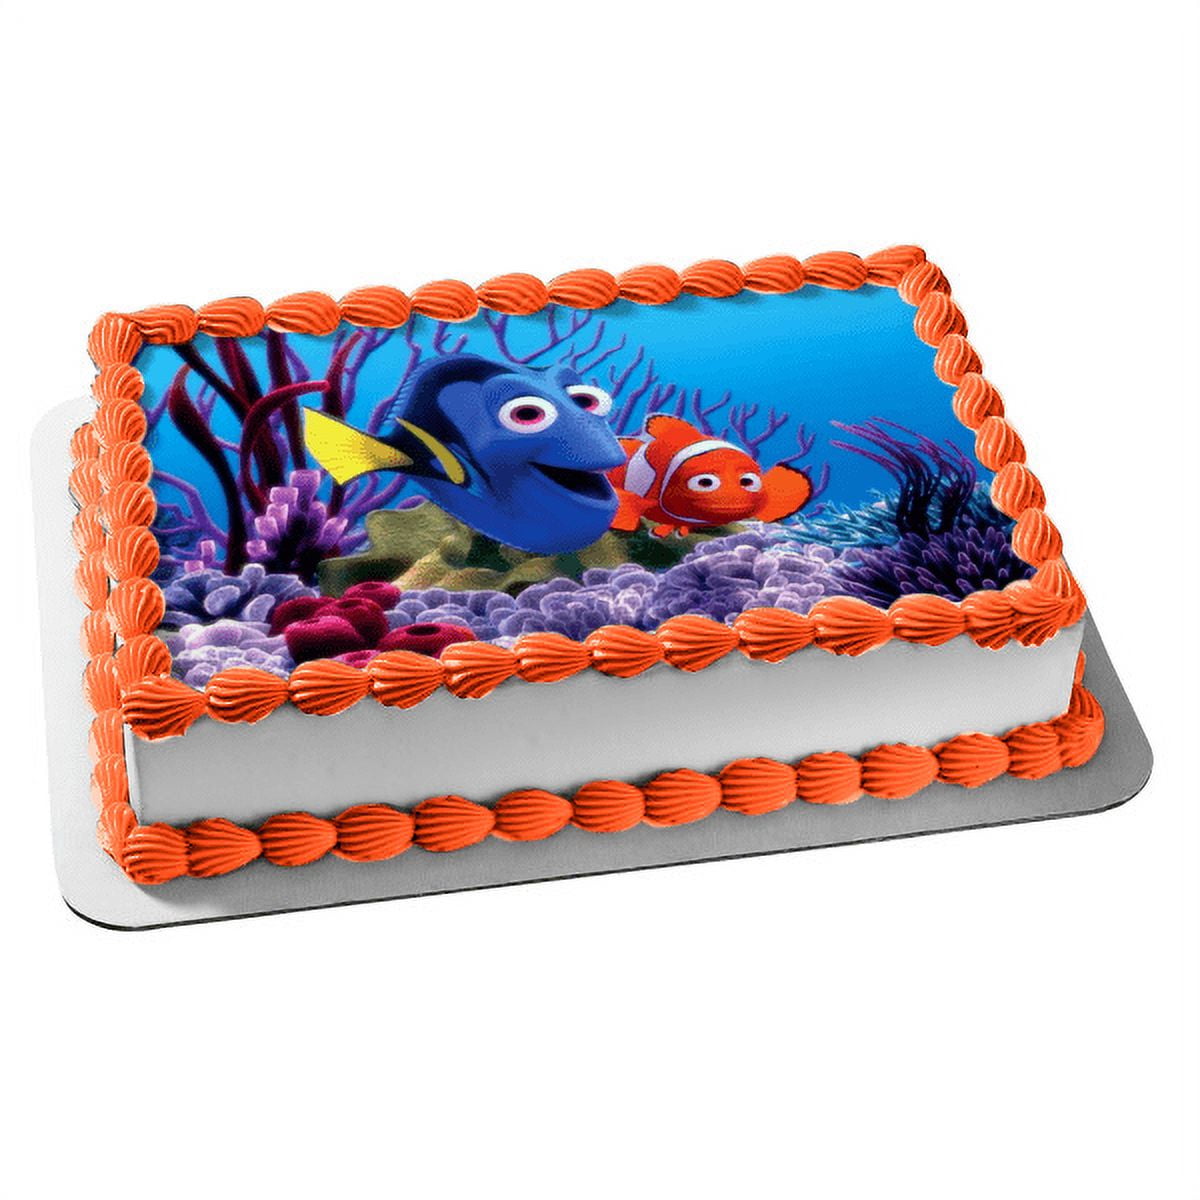  DecoSet® Bluey Dance Mode Cake Toppers, 3 Piece Cake